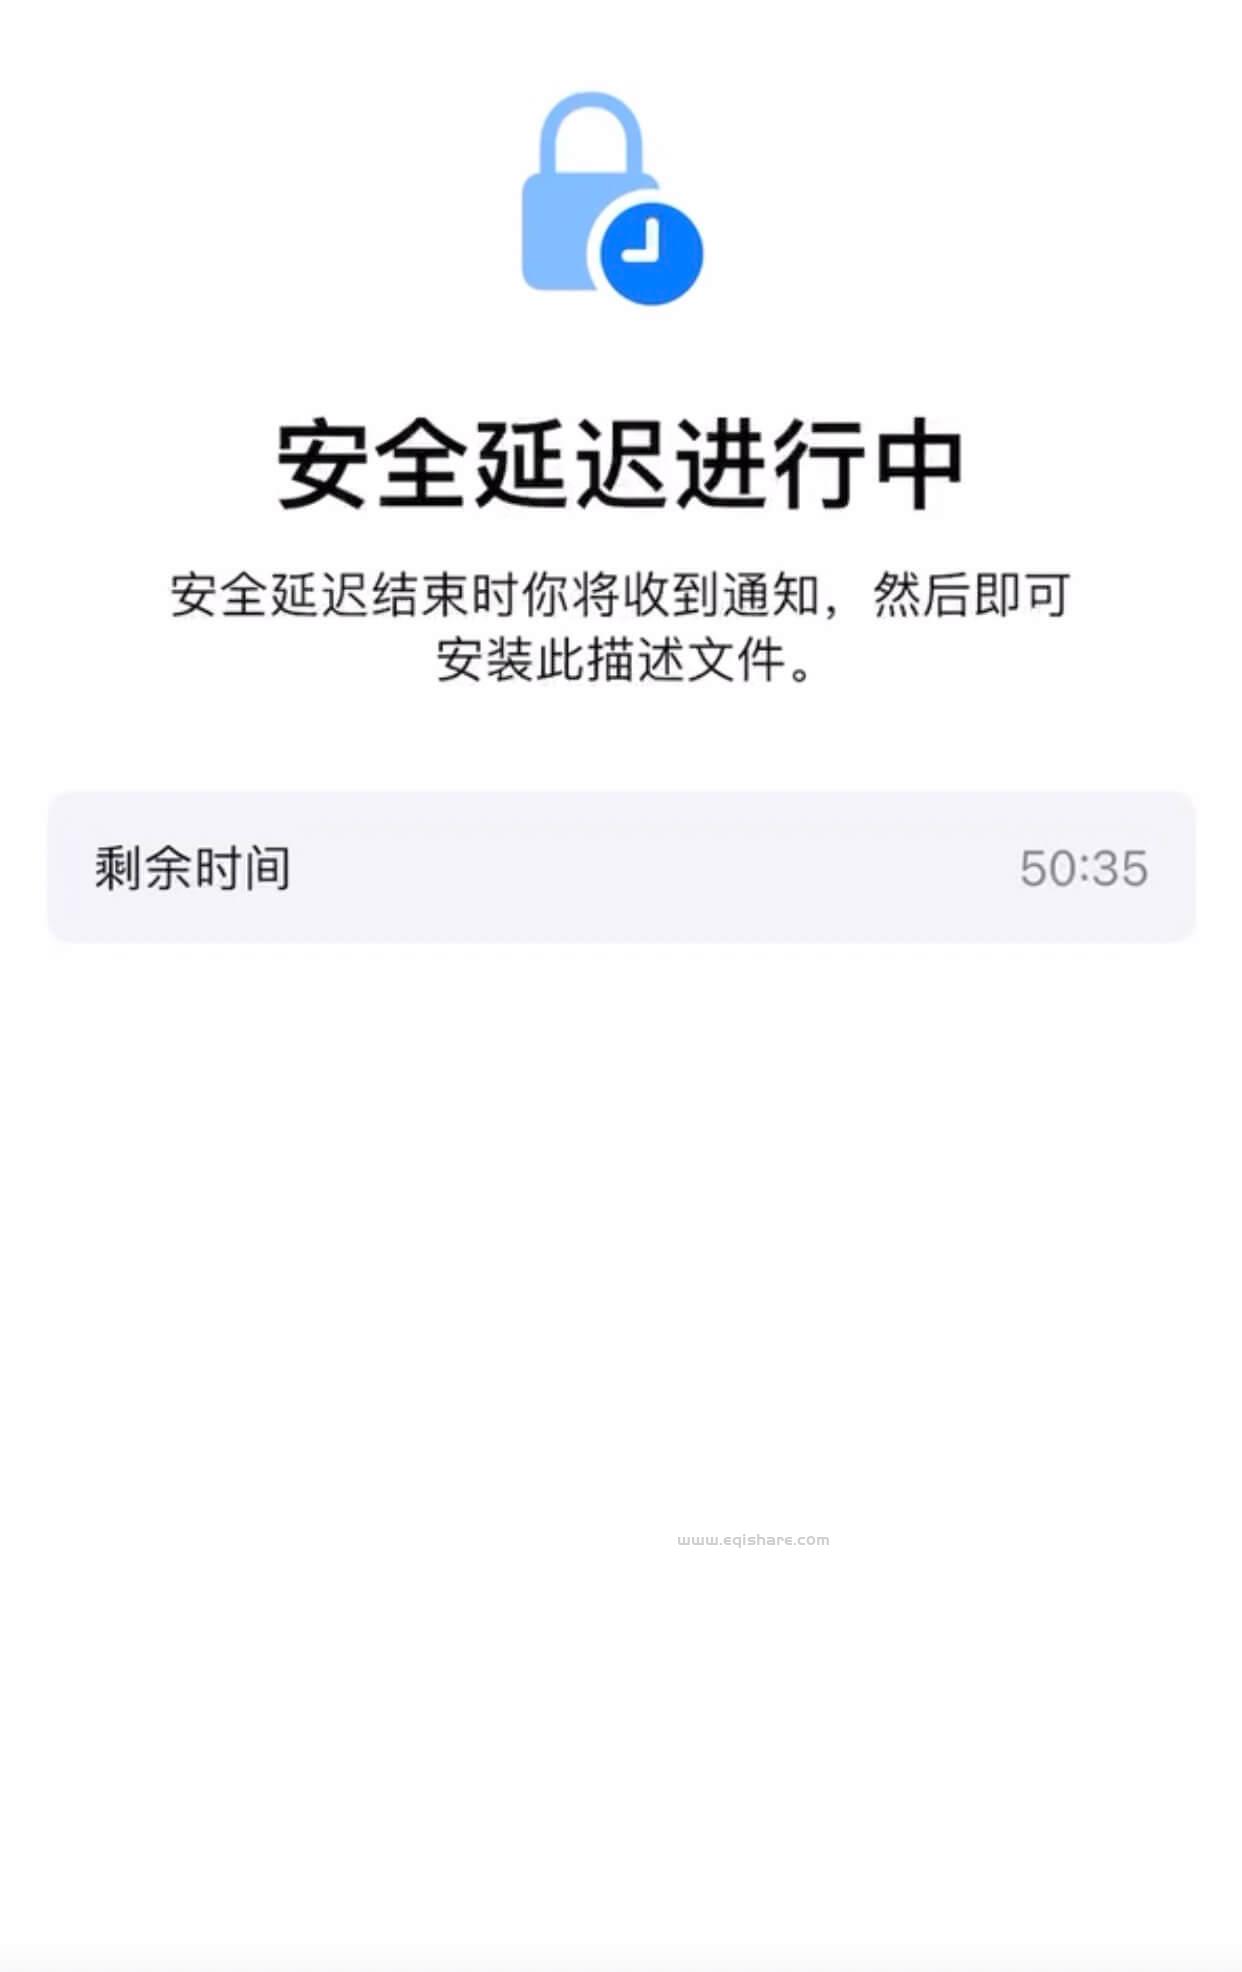 iOS17.4获取UDID安装mobileconfig描述文件失败 提示“安全延迟进行中”问题 ｜ 失窃设备保护